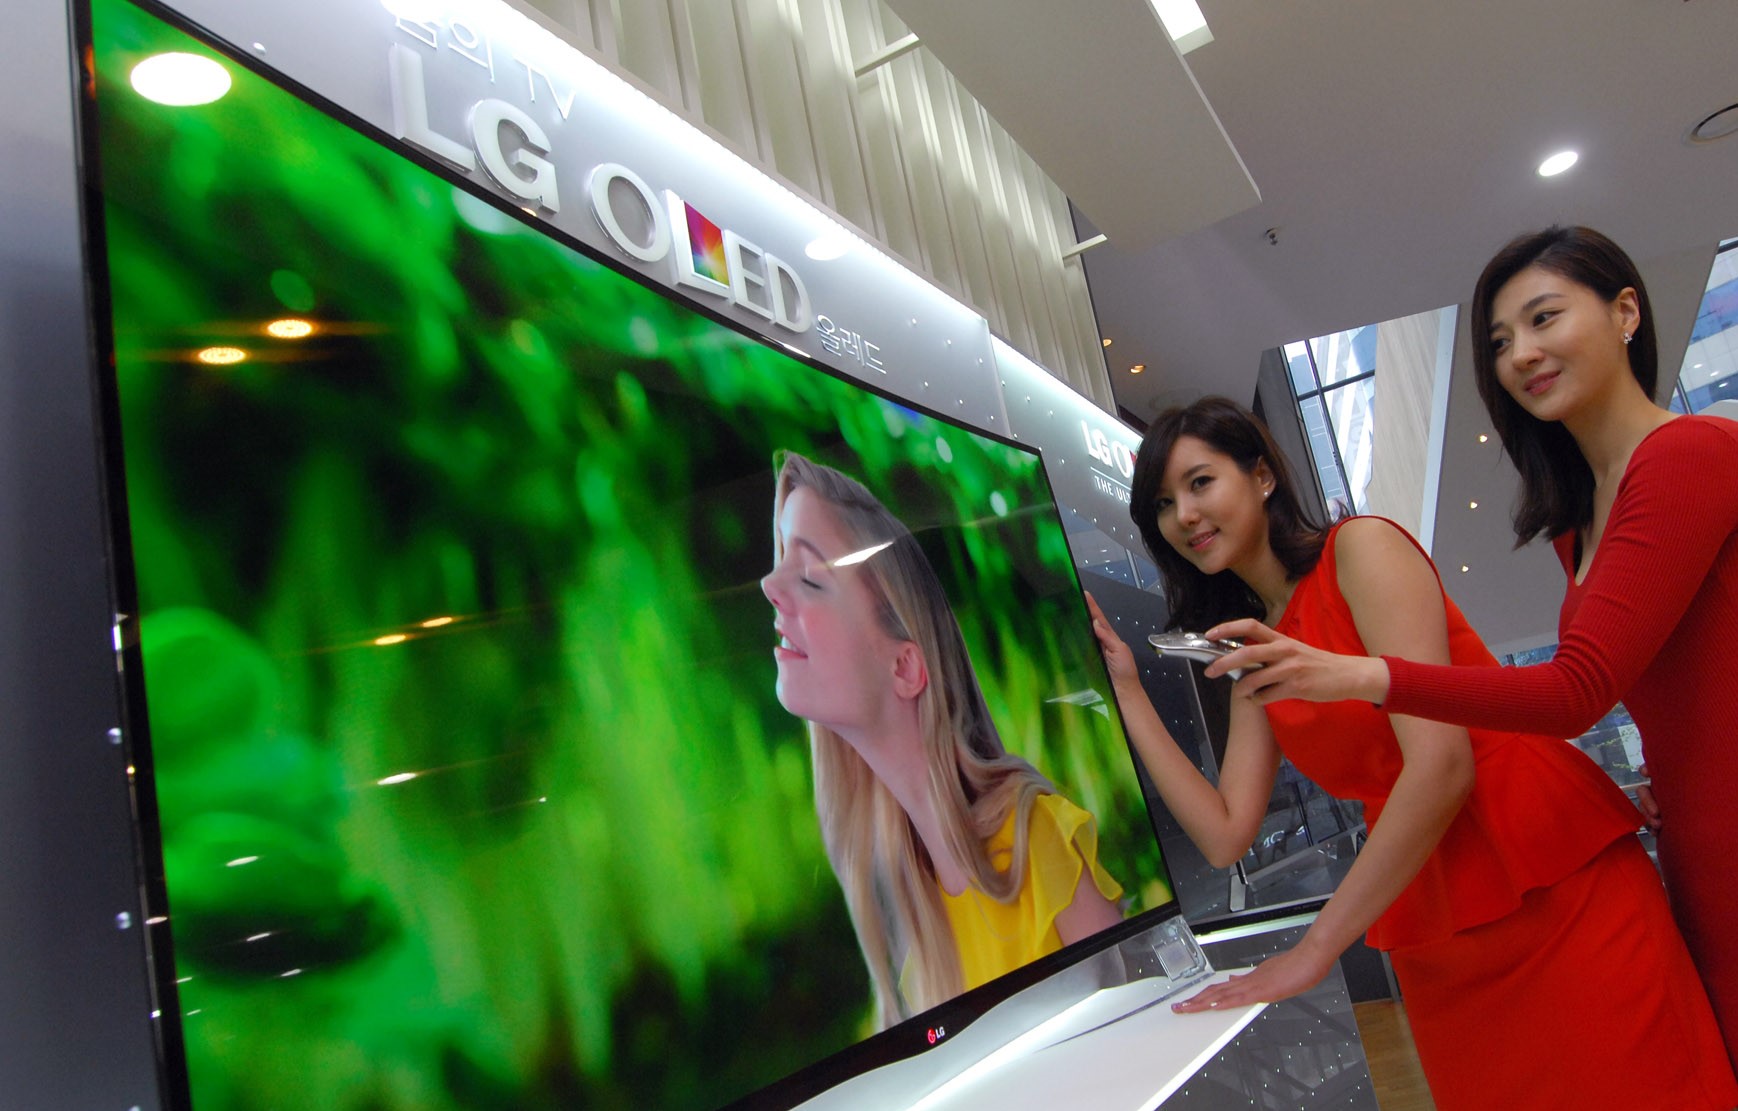 OLED-телевизор с изогнутым экраном LG 55EA9800